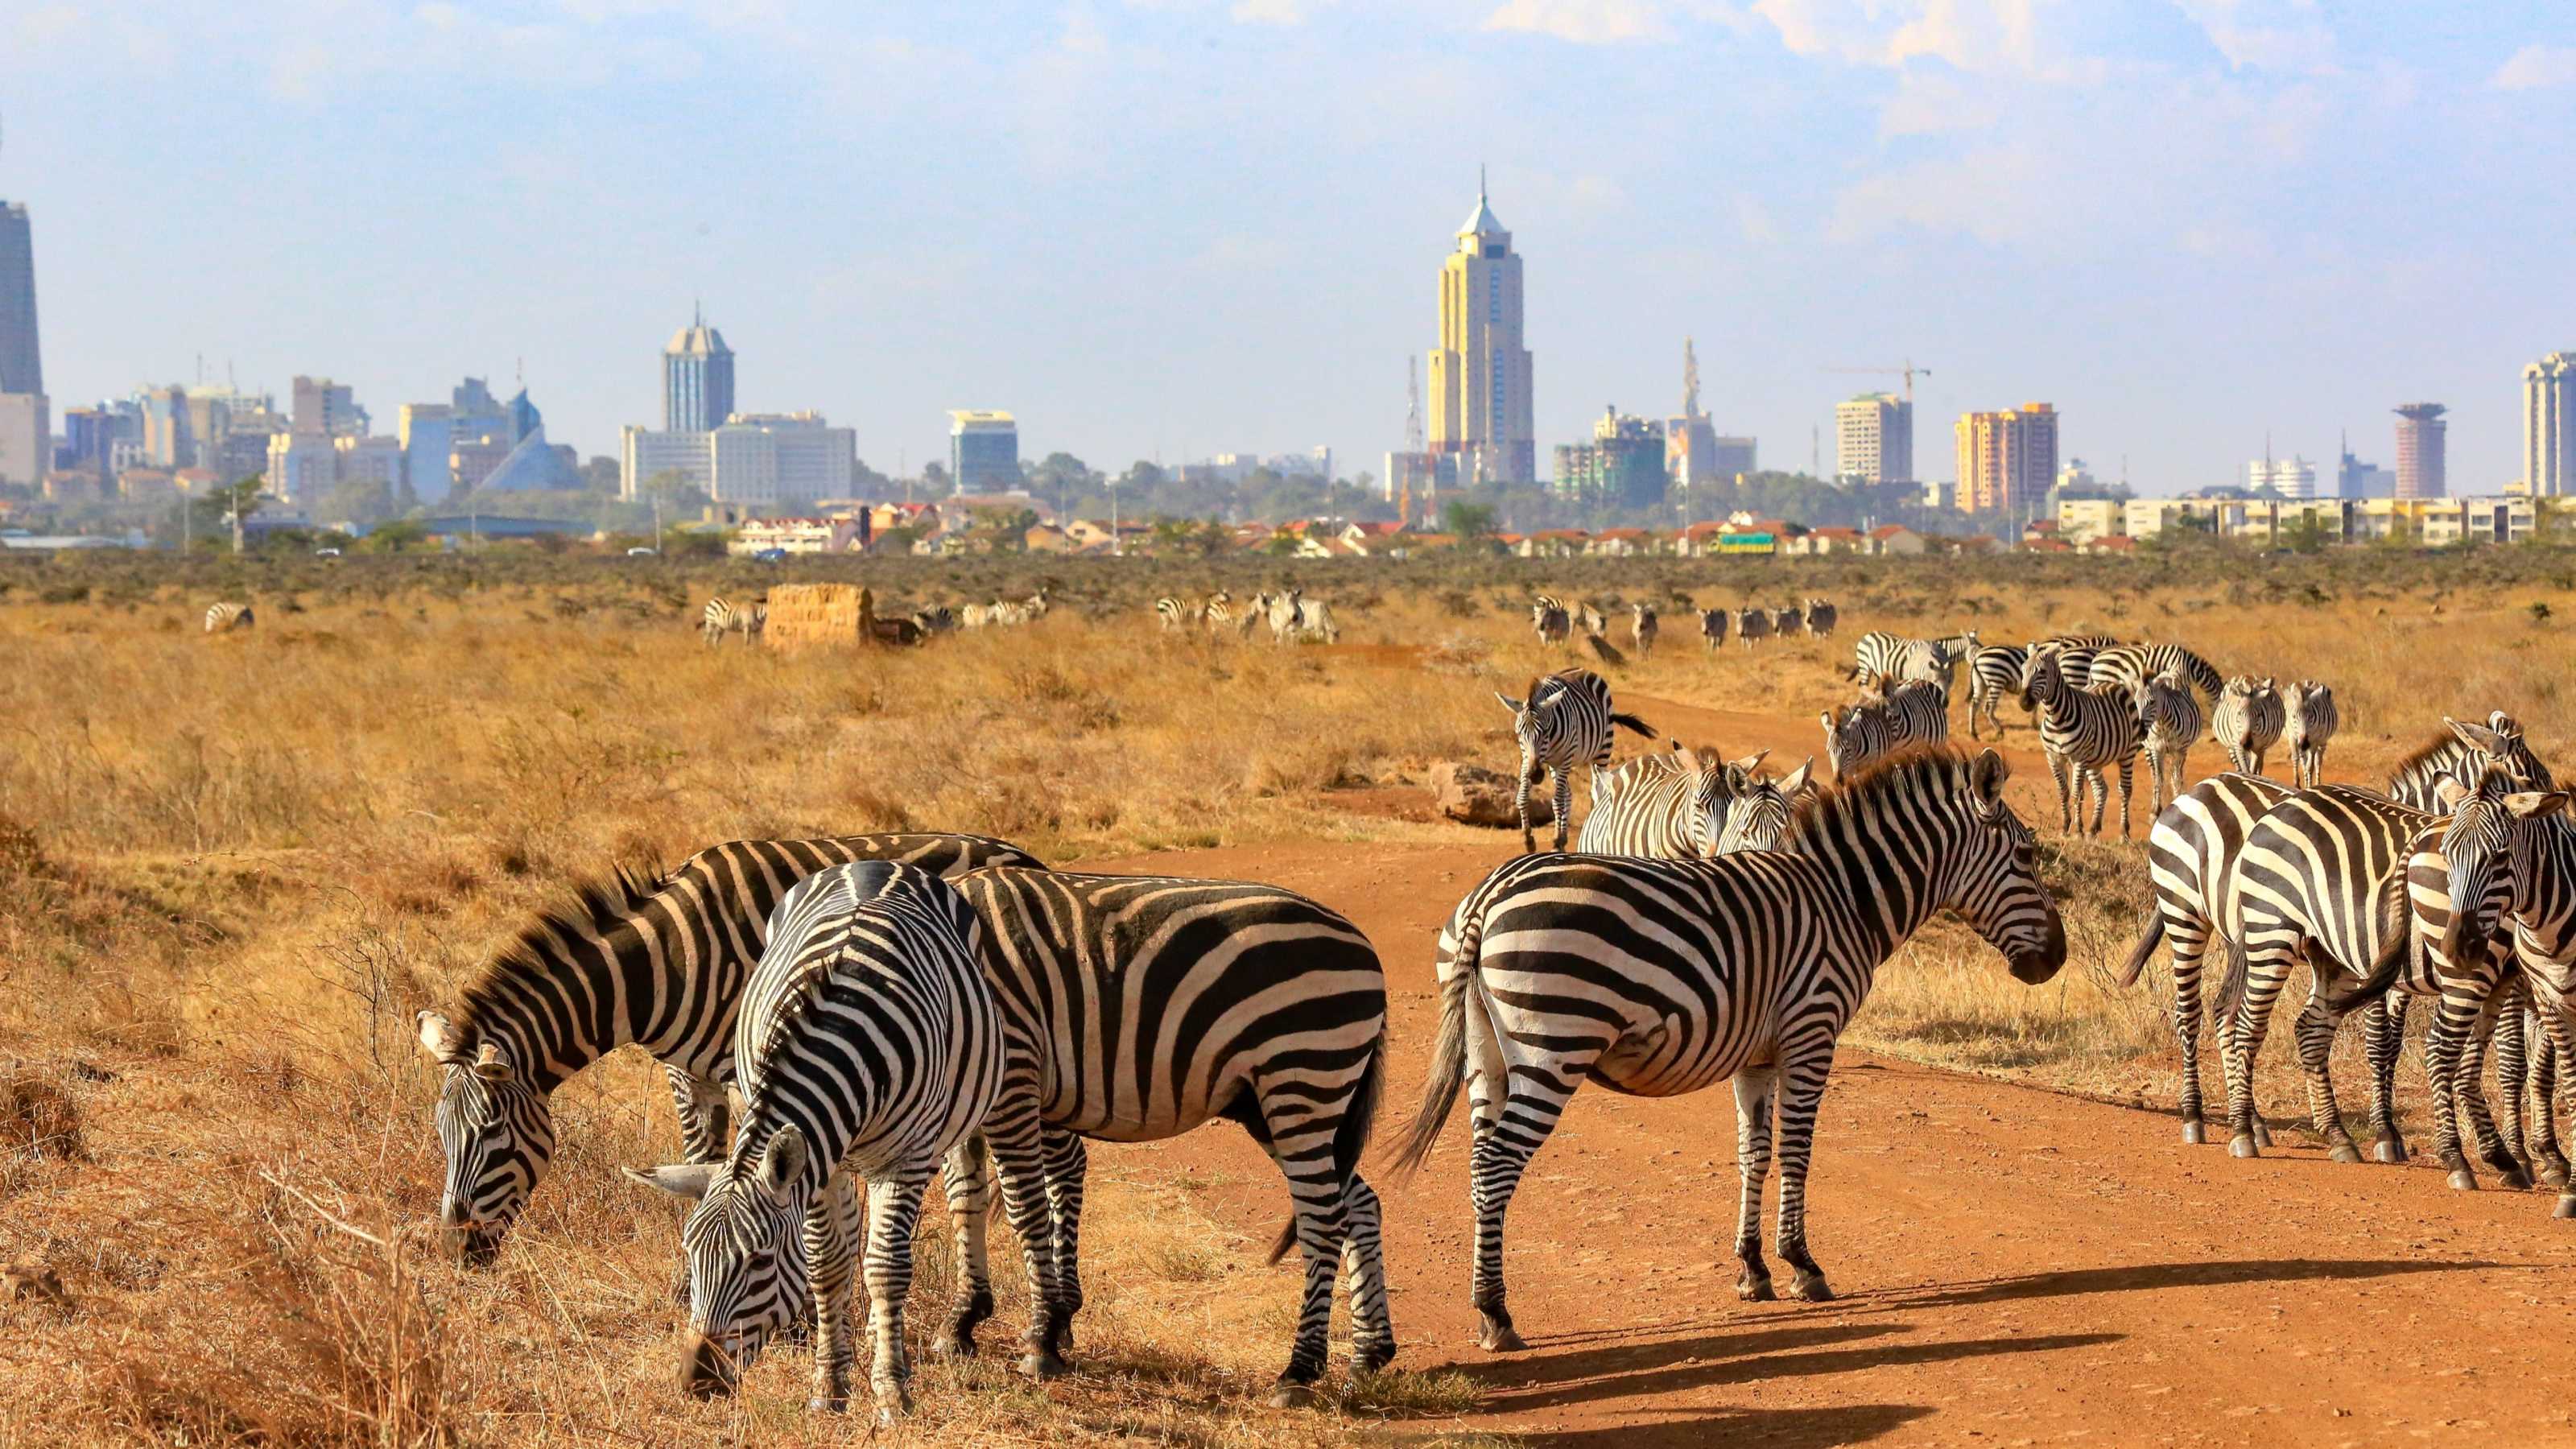 Z  Bres Parc National Nairobi ?w=3200&h=1800&q=50